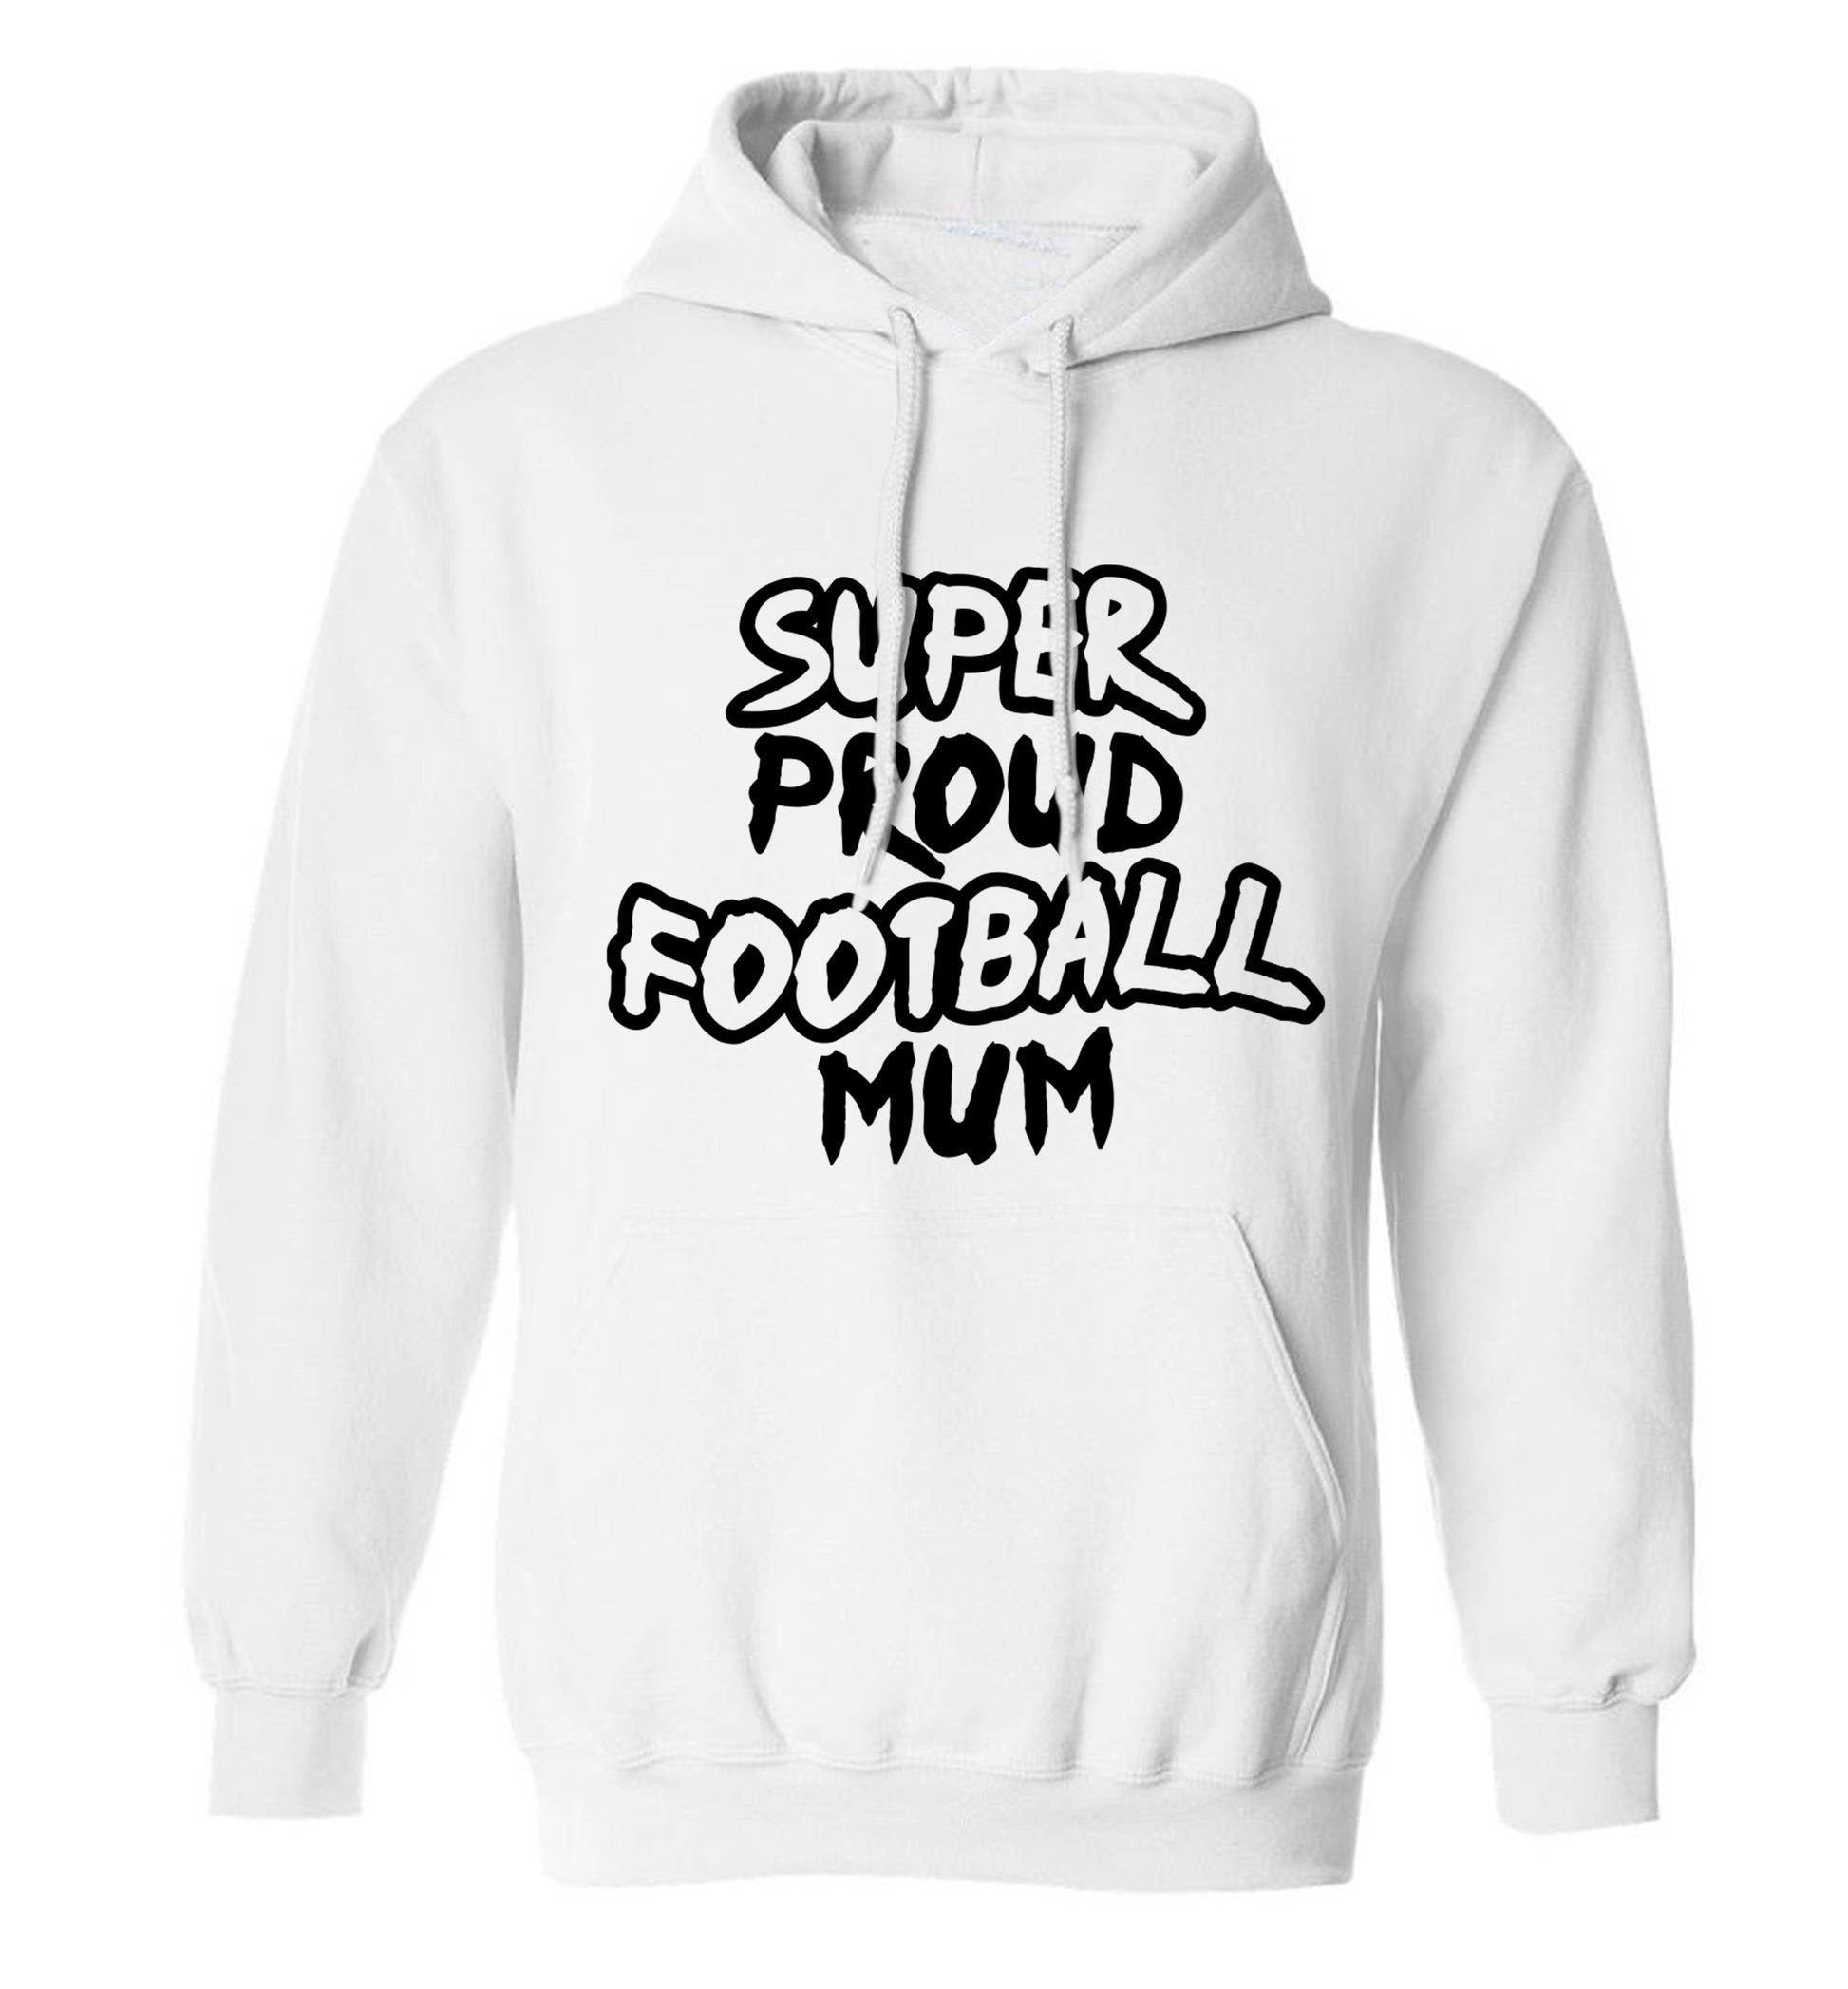 Super proud football mum adults unisexwhite hoodie 2XL